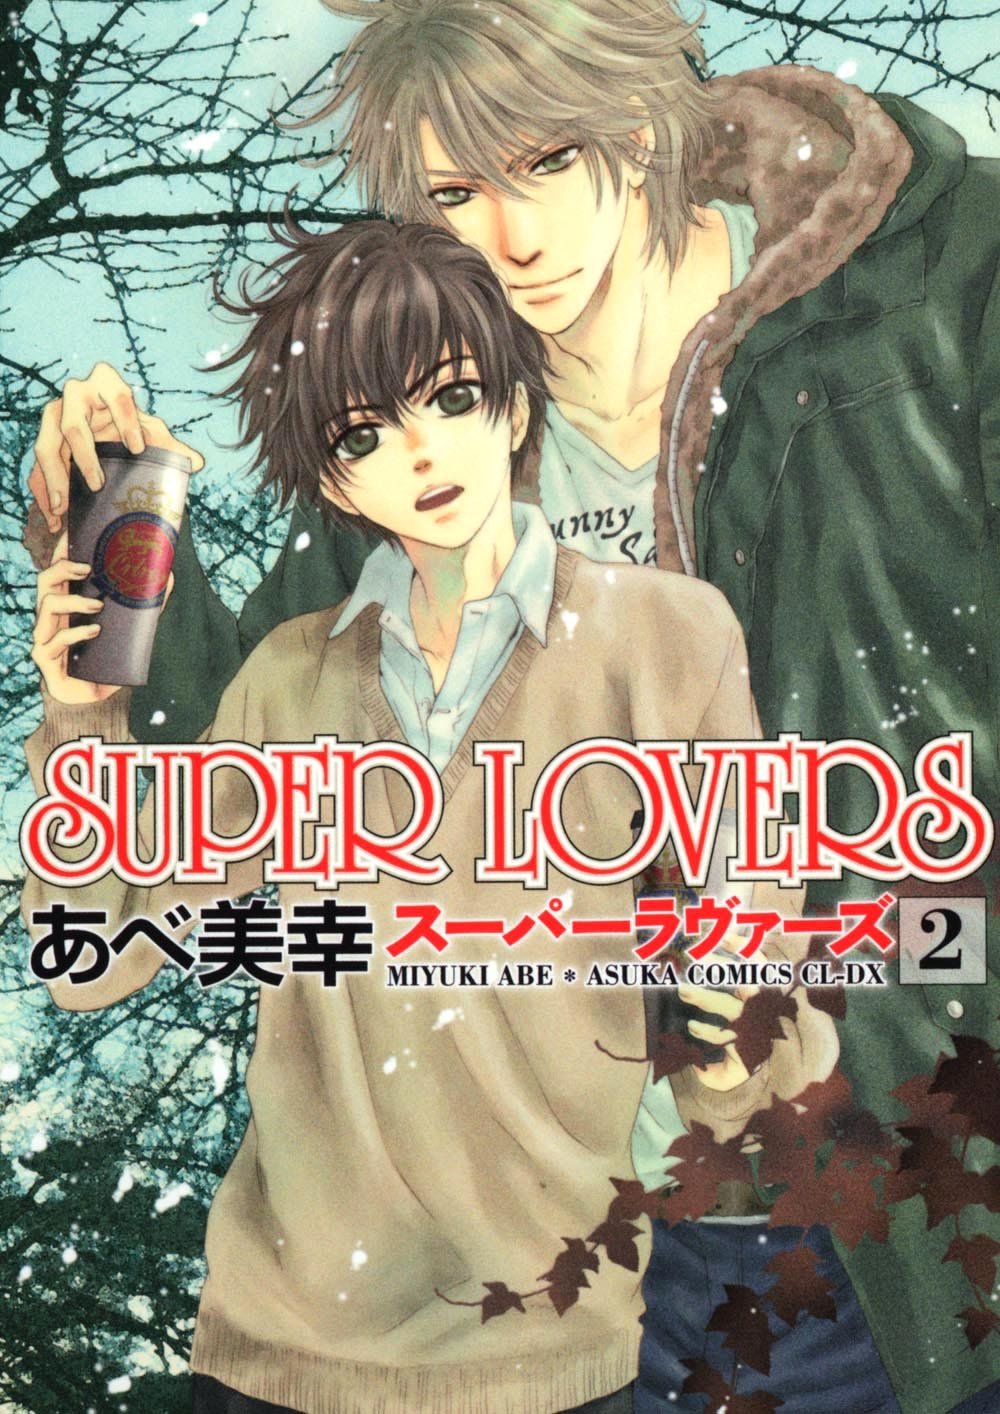 Super Lovers | Anime Amino